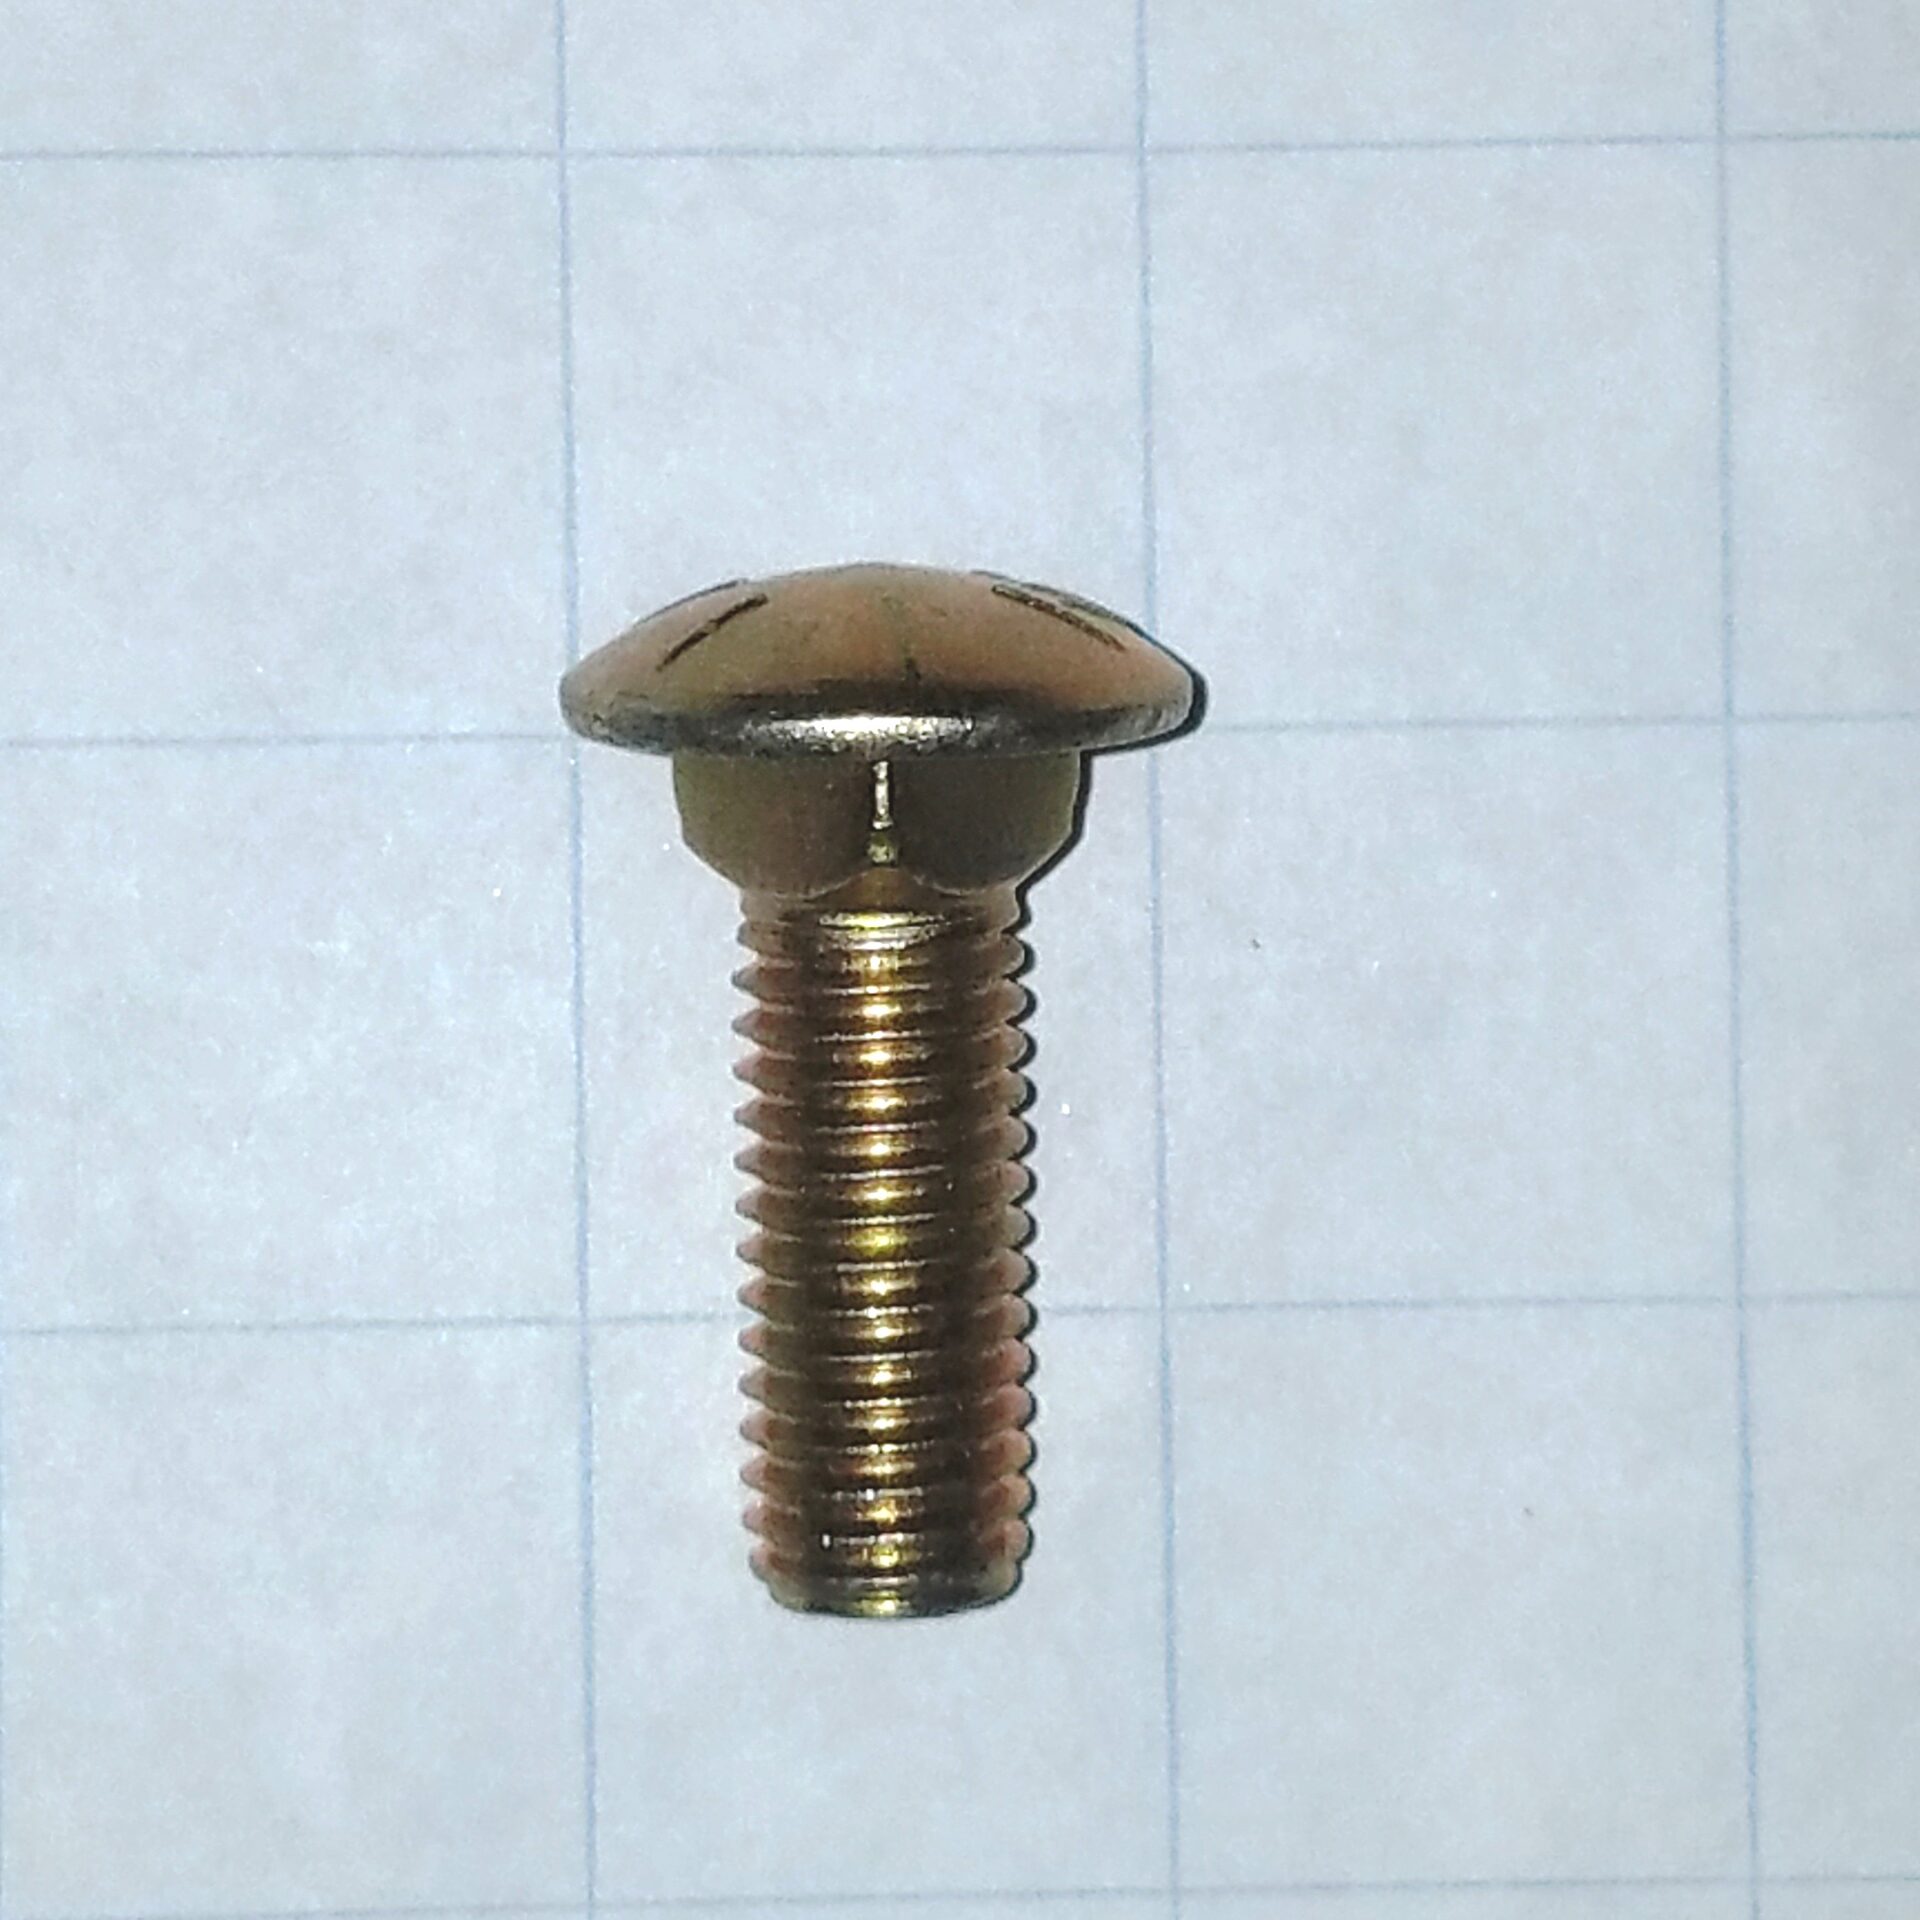 a metal screw